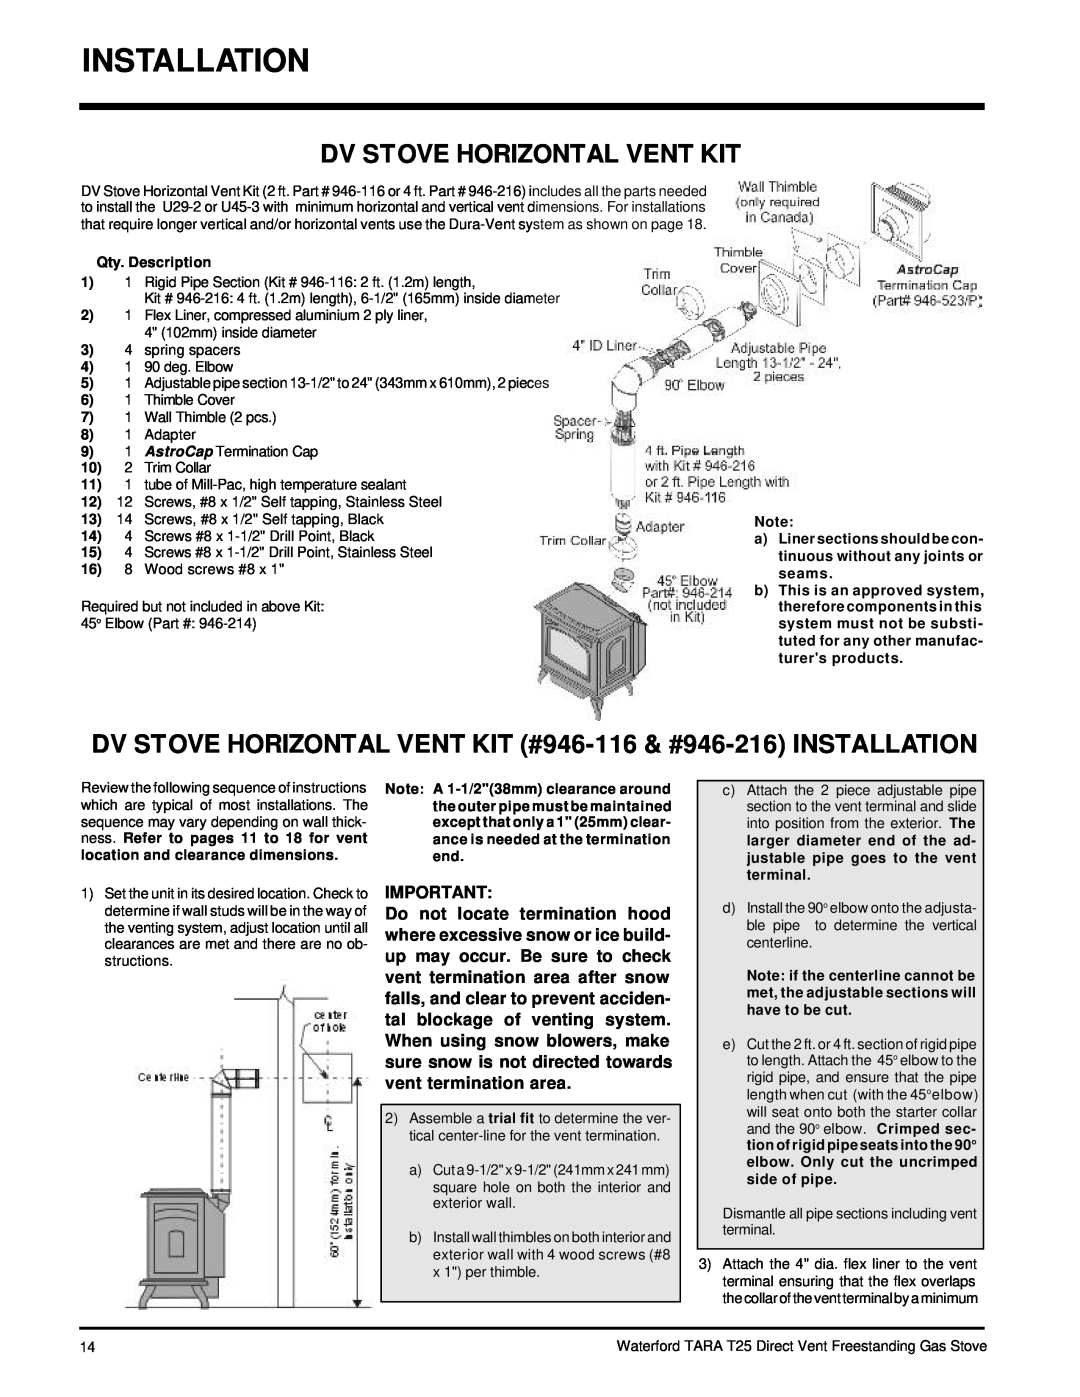 Waterford Appliances T25-NG, T25-LP installation manual Dv Stove Horizontal Vent Kit, Qty. Description 